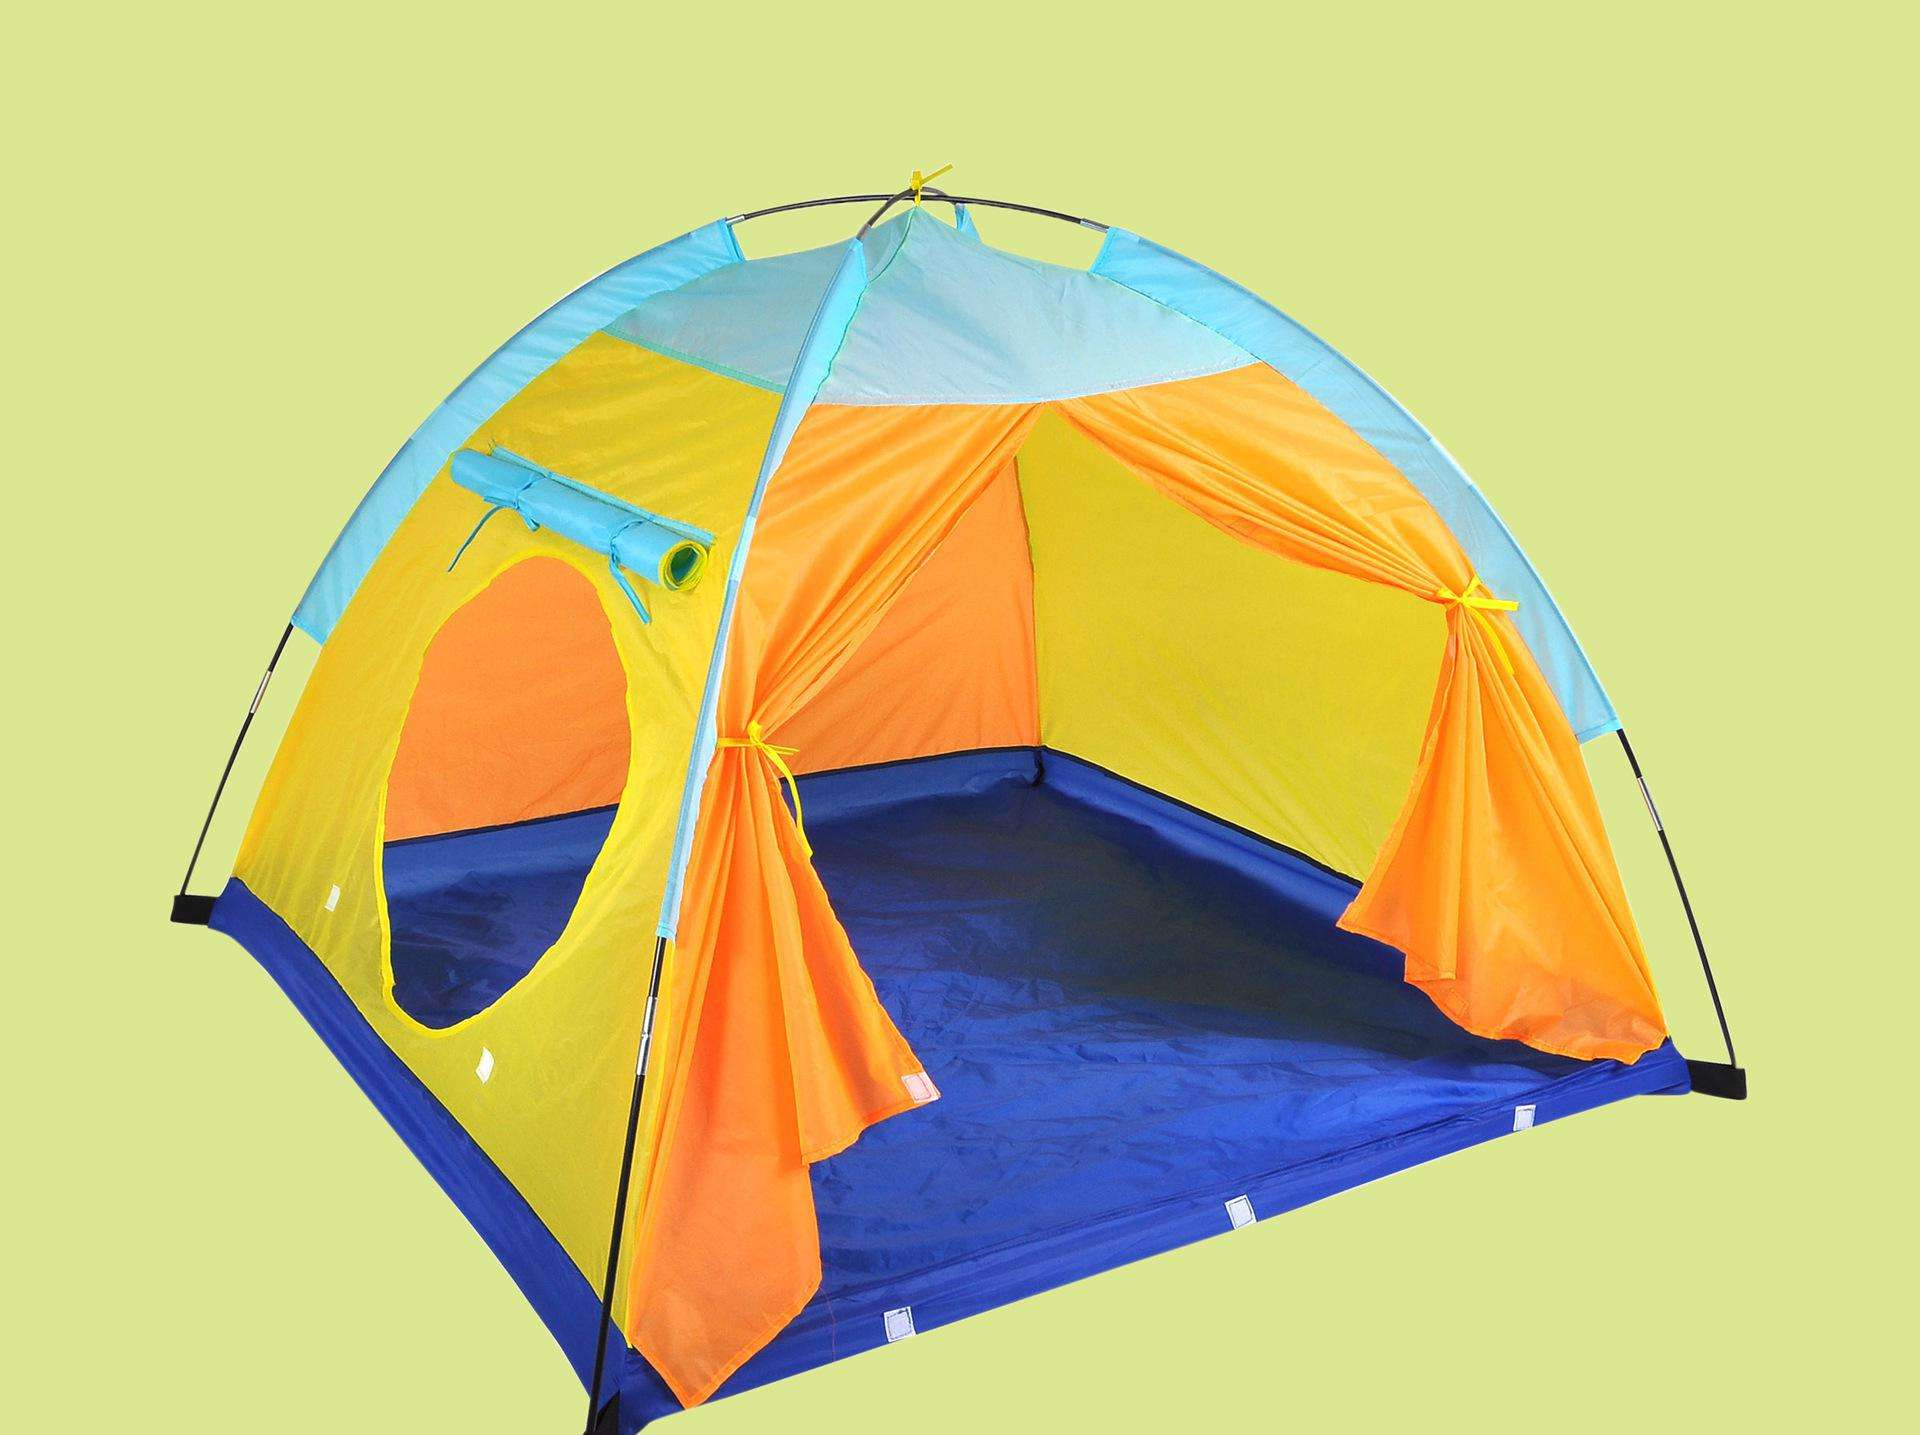 Portable kids playing tent home sleeping orange